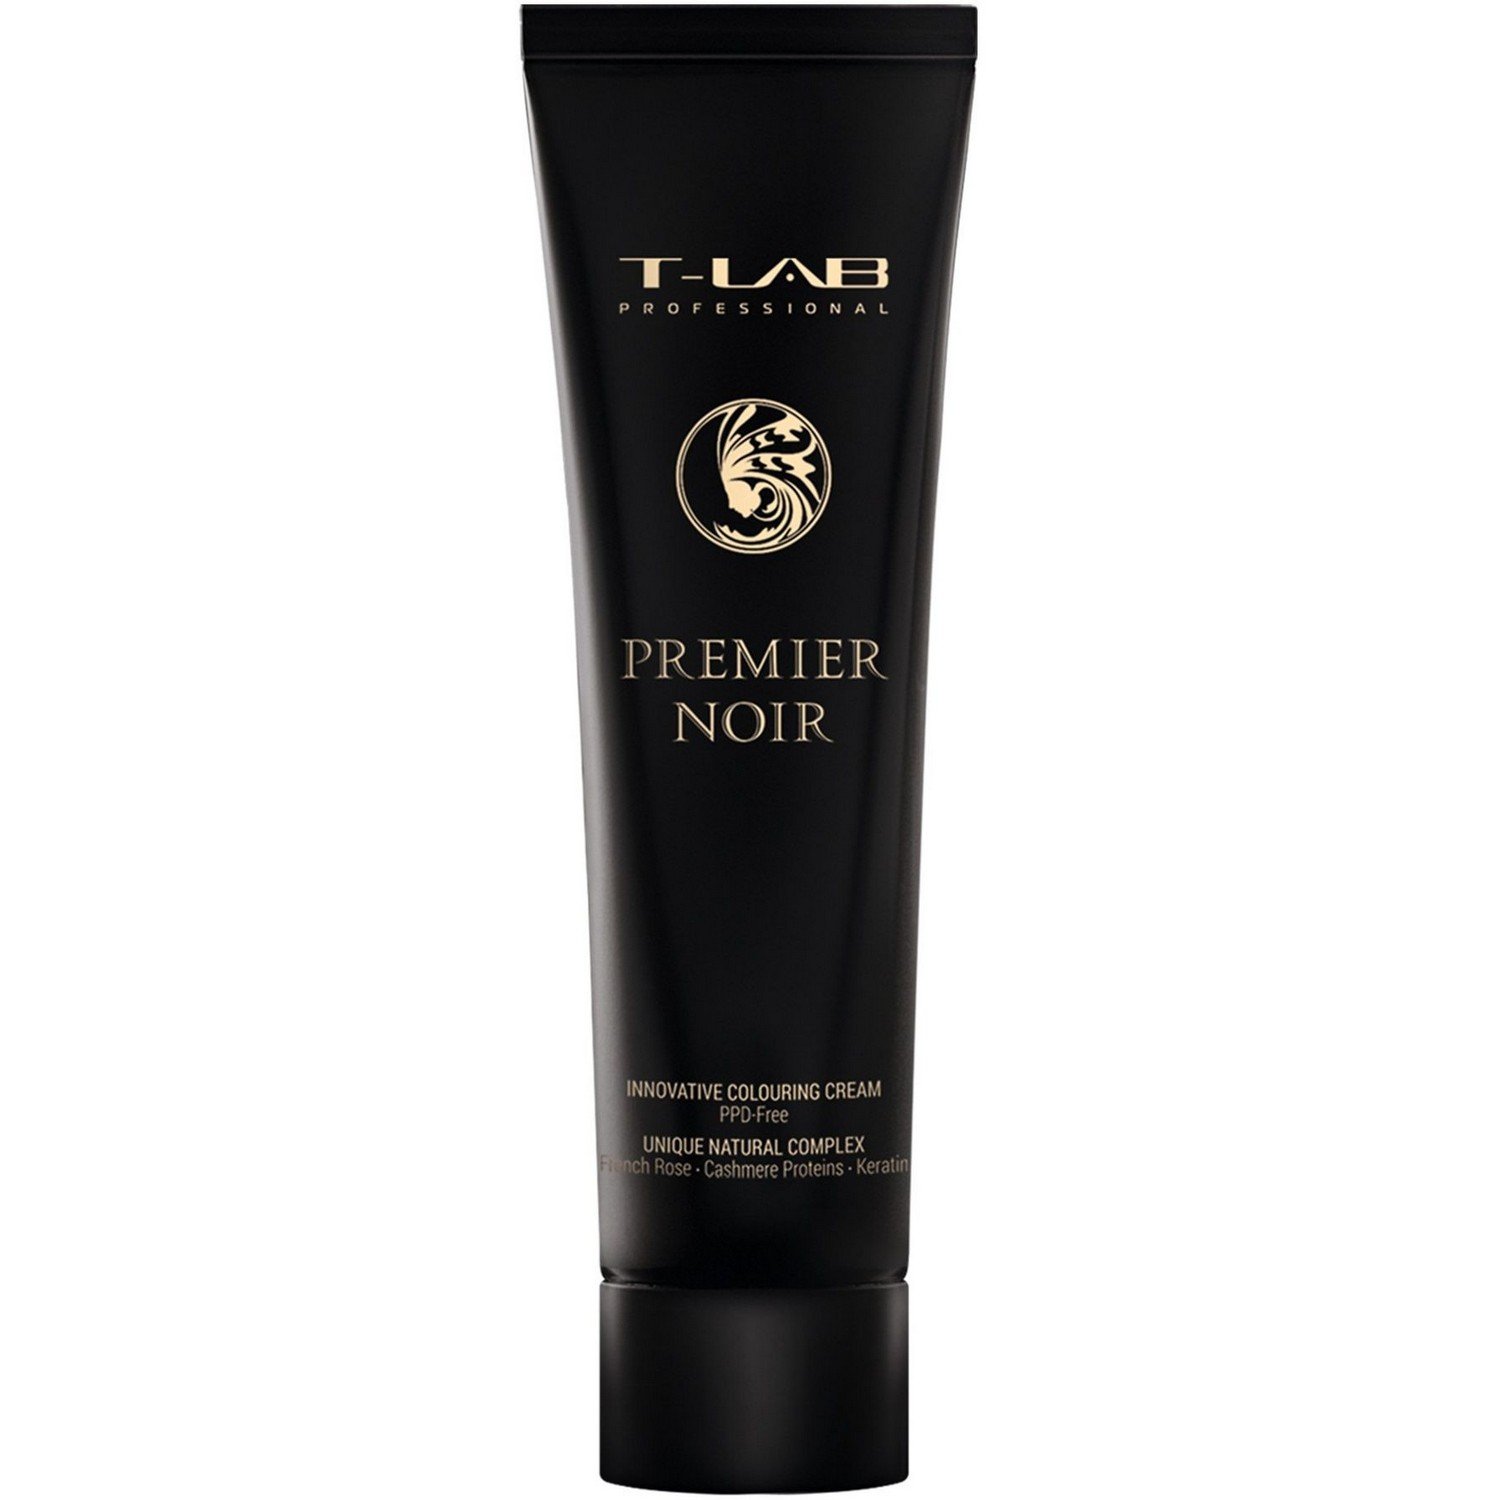 Крем-краска T-LAB Professional Premier Noir colouring cream, оттенок 6.52 (dark mahogany iridescent blonde) - фото 1